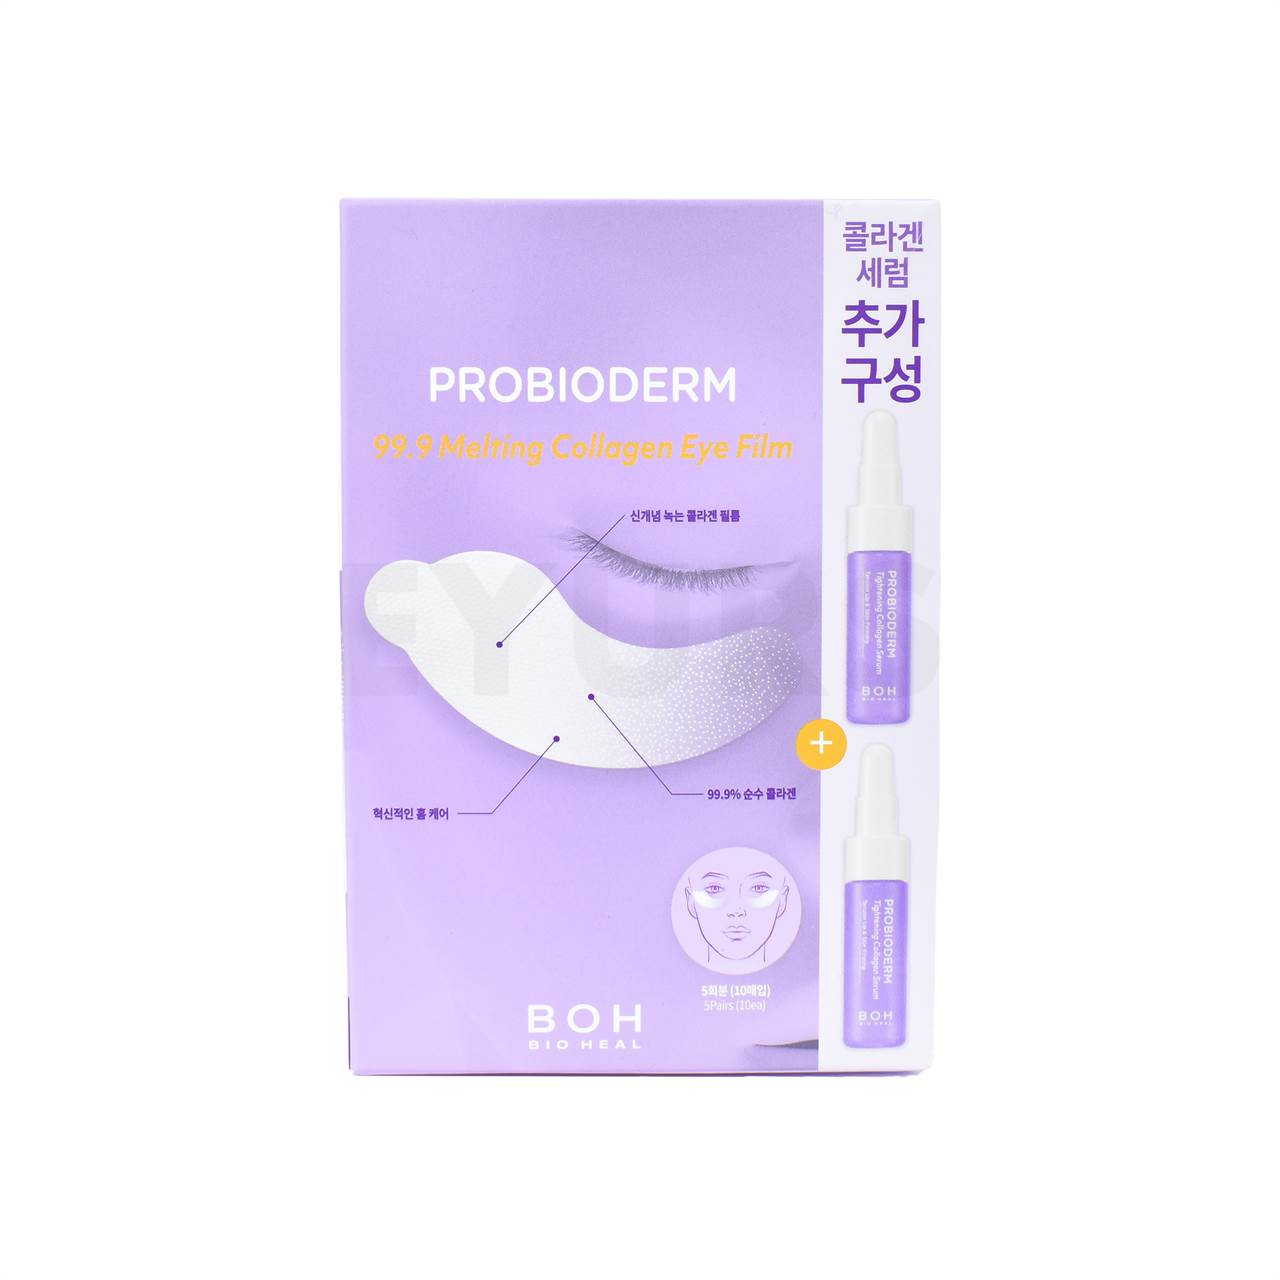 bioheal boh probioderm 99.9 melting collagen eye film front side packaging